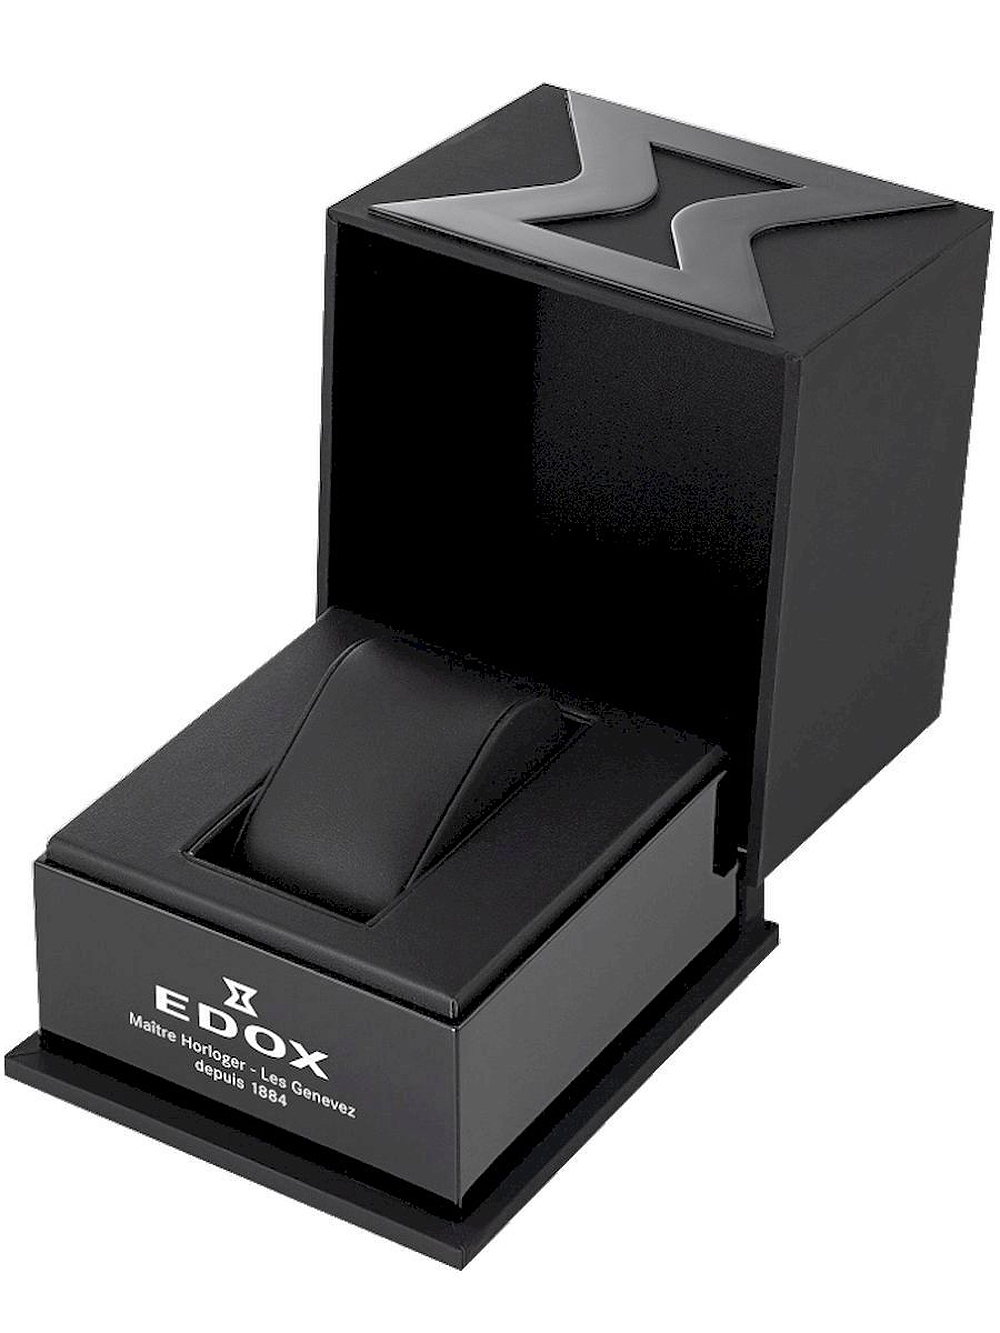 Zegarek męski Edox 80106-3C-NIN Les Vauberts Automatic